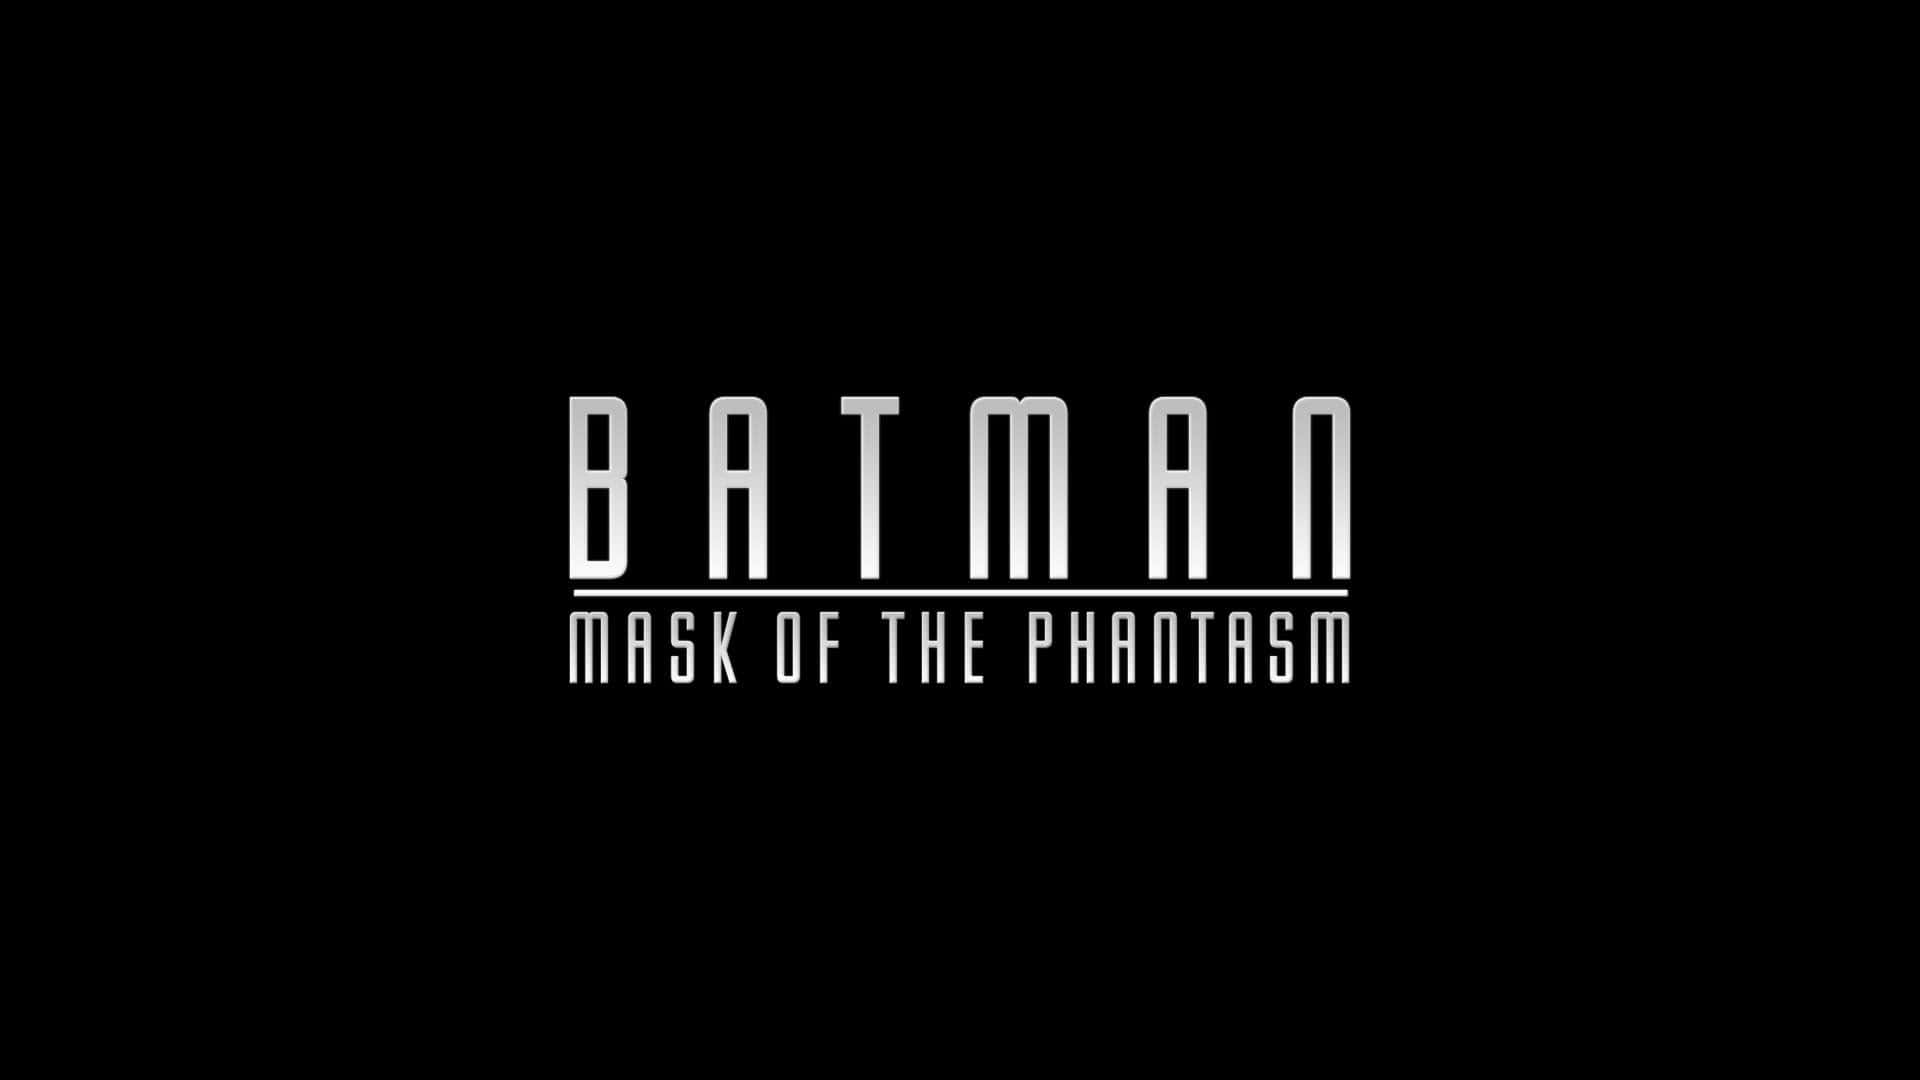 Batman and the Phantasm face off in Gotham City Wallpaper